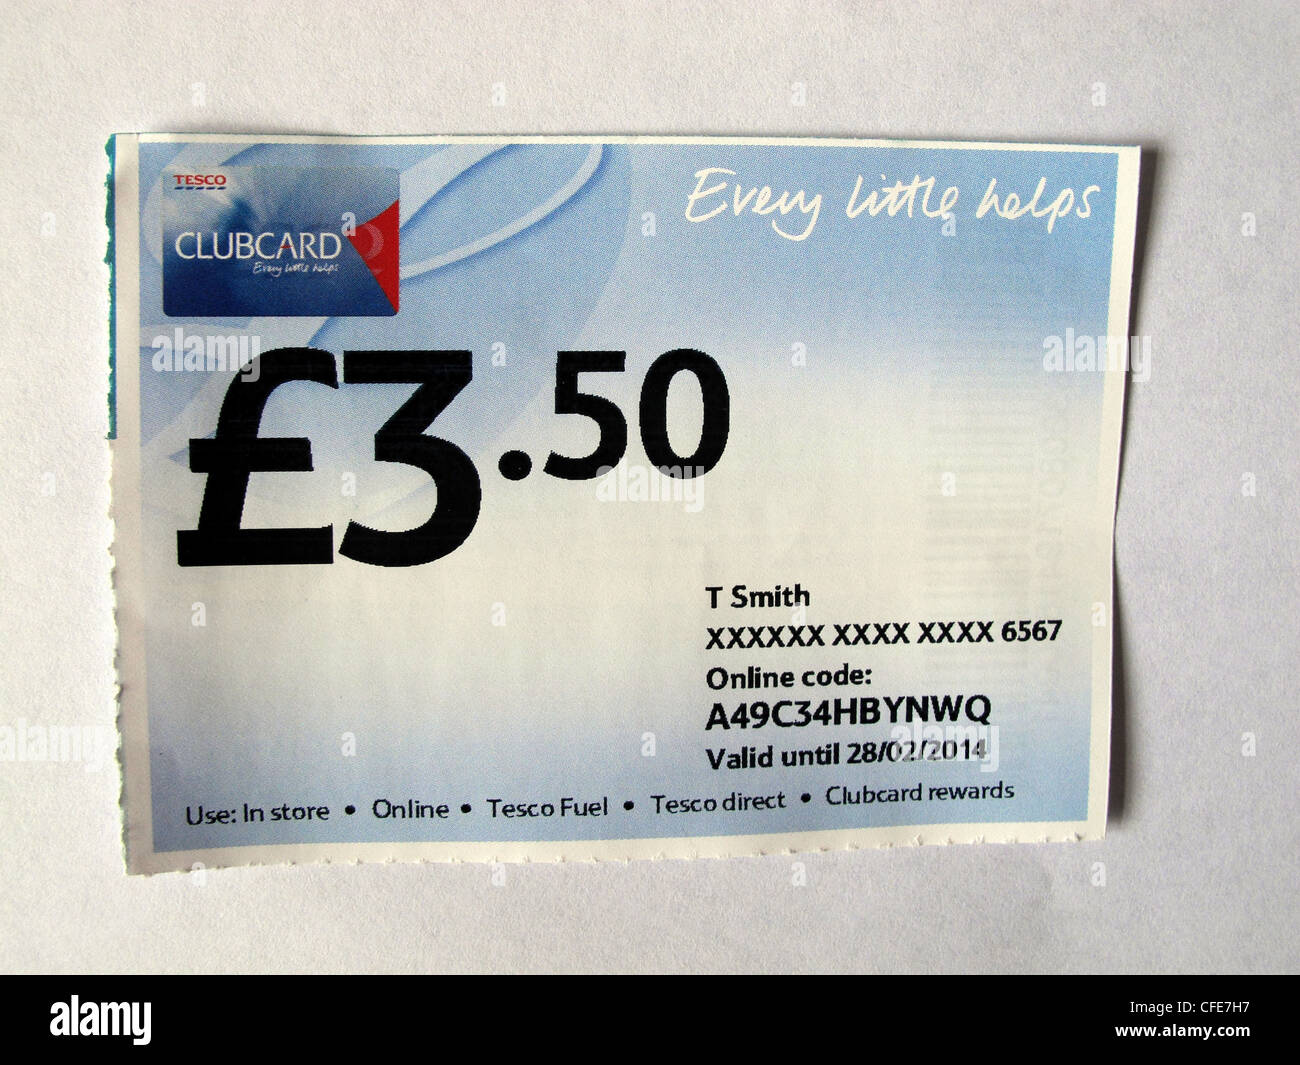 £3.50 Tesco Clubcard 'Every Little Helps' voucher Stock Photo